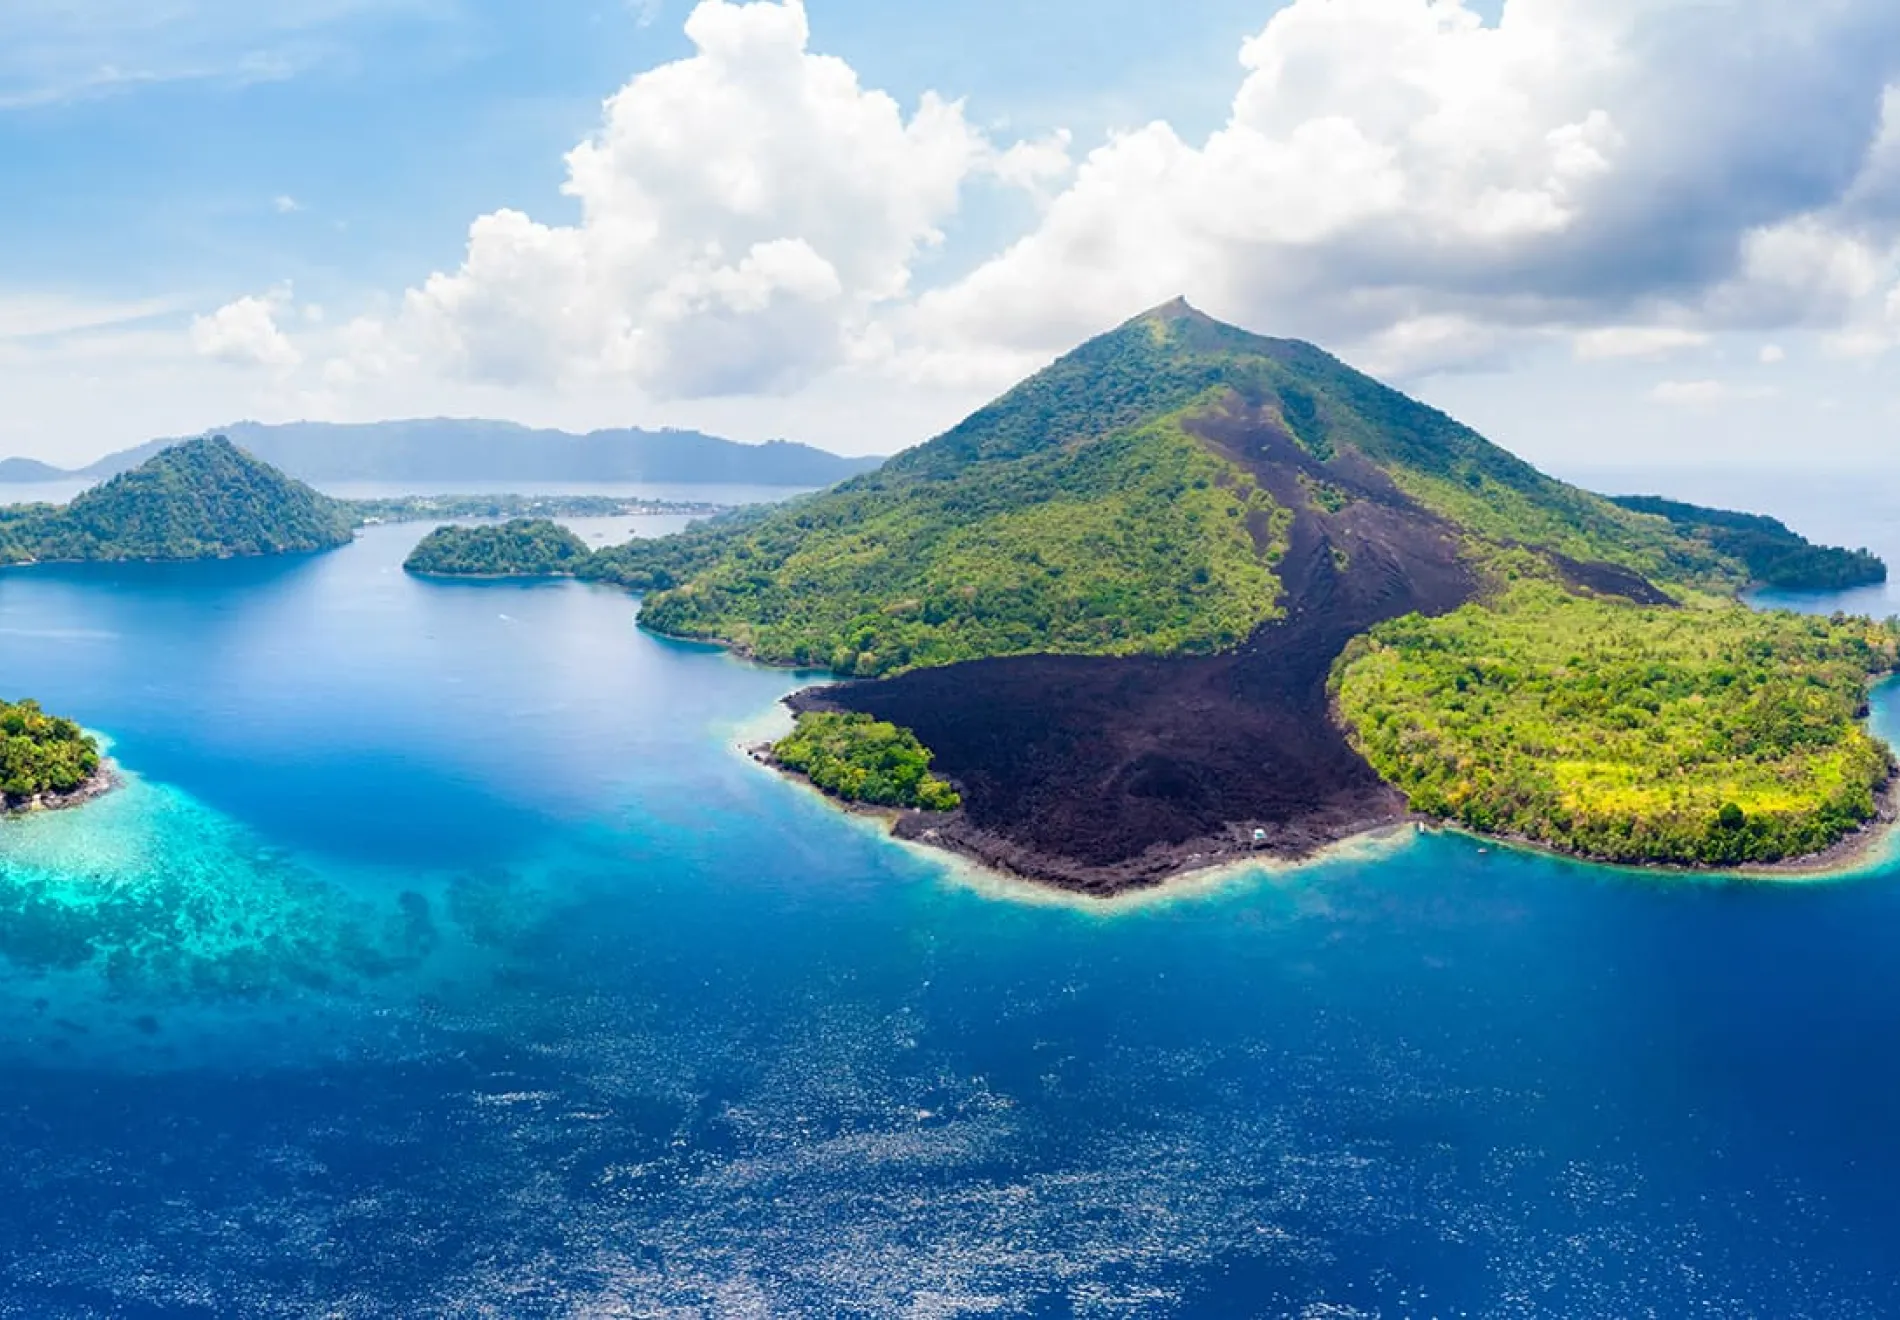 Aerial-view-Banda-Islands-Moluccas-archipelago-Indonesia-Pulau-Gunung-Api-lava-flows-coral-reef-white-sand-beach.-Top-travel-tourist-destination-best-diving-snorkeling